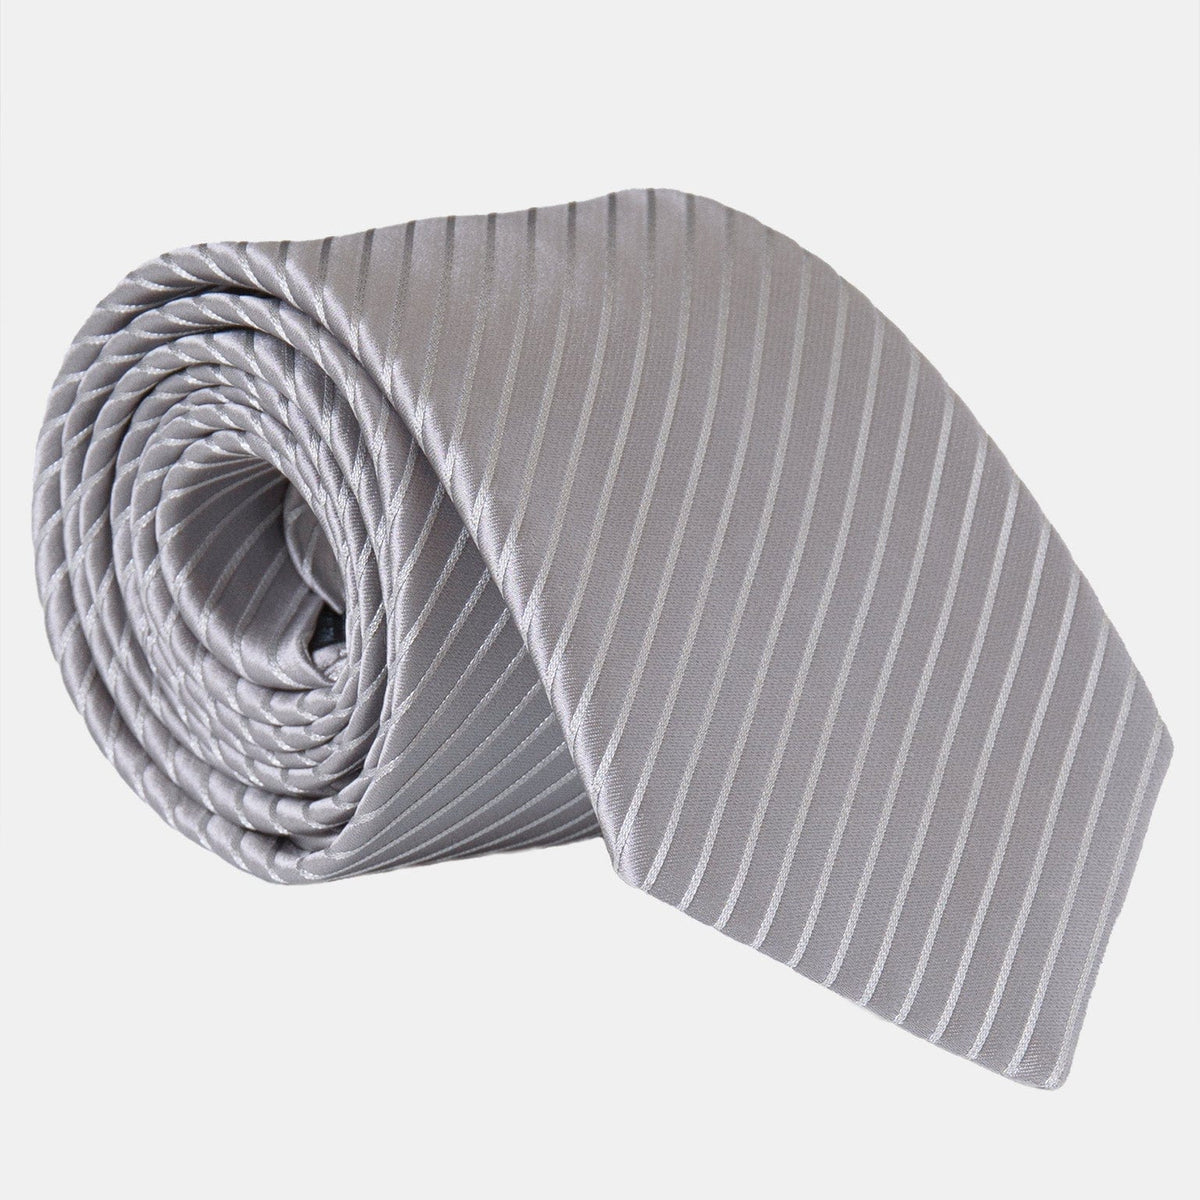 Extra long silver striped silk tie